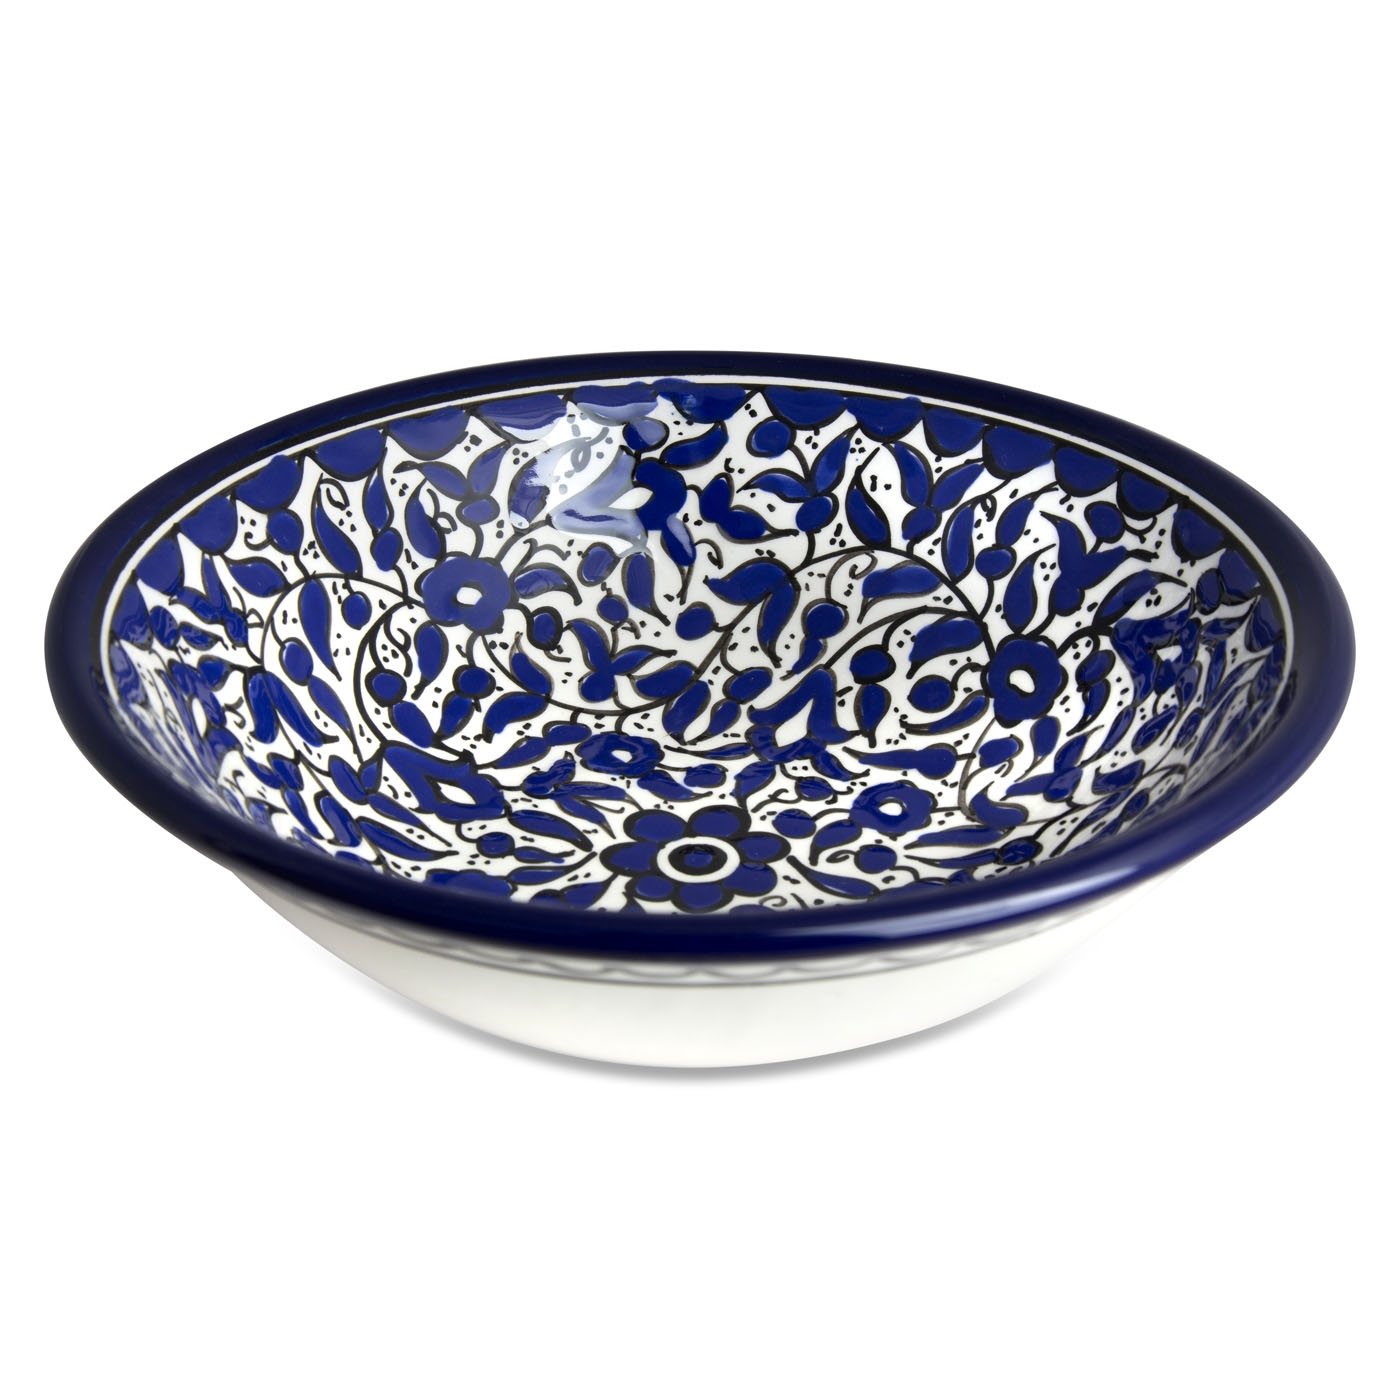 Armenian Ceramics Blue Floral Extra Large Serving Bowl  - 2